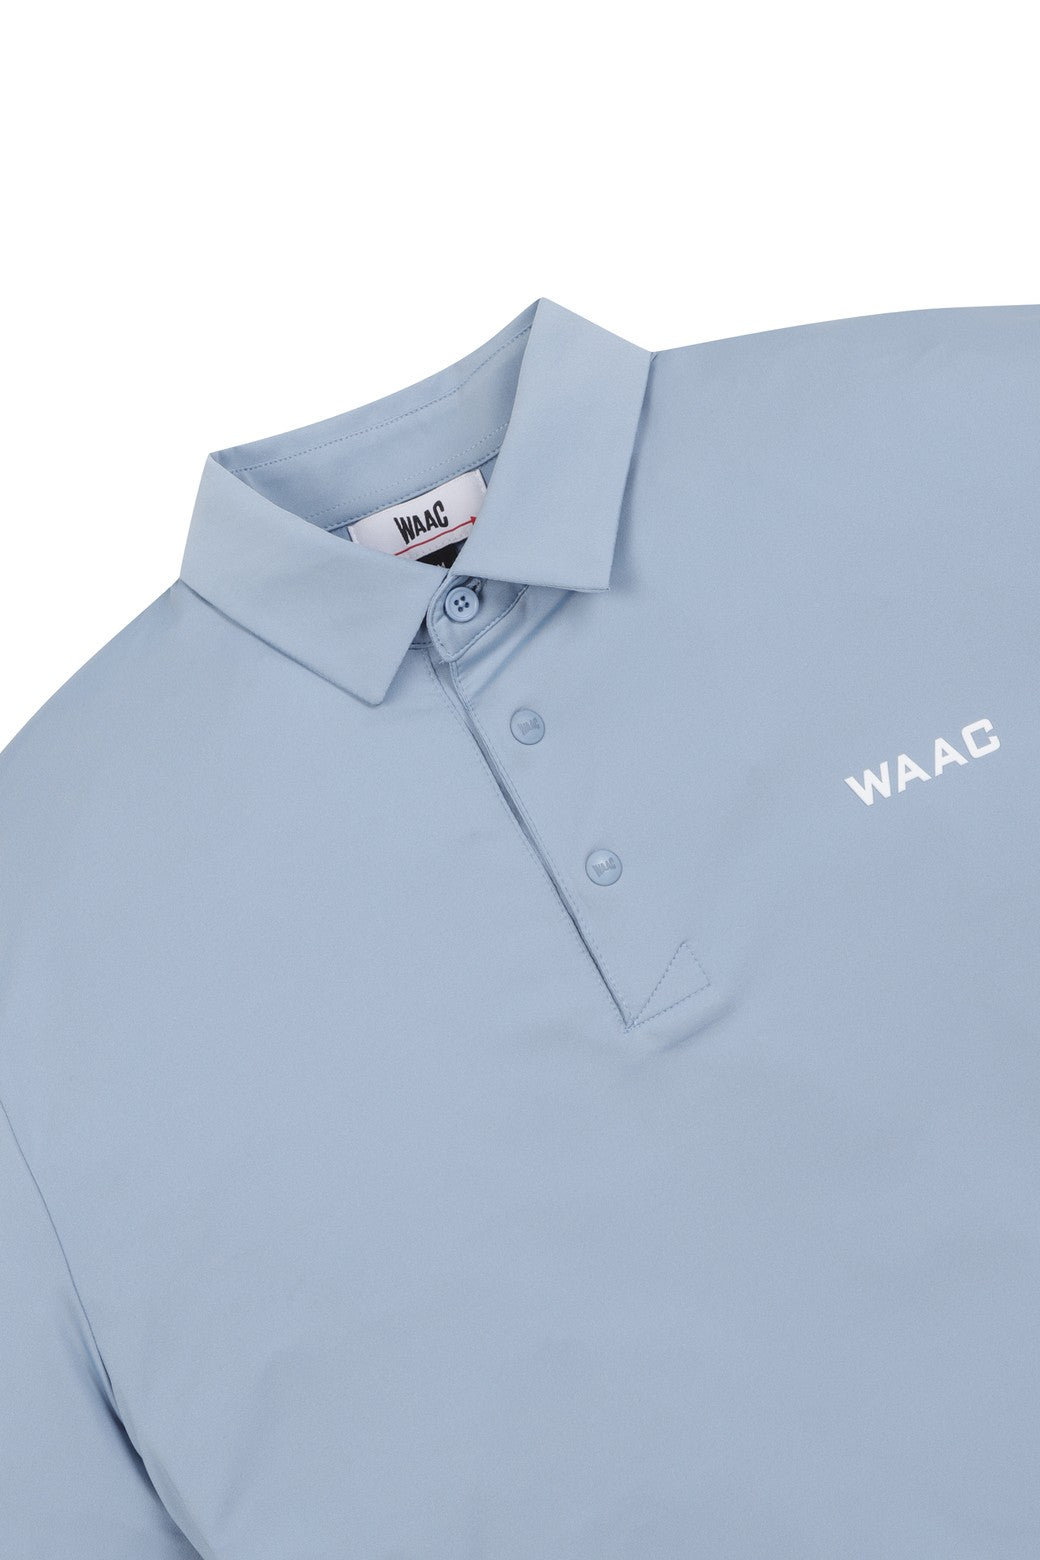 WAAC  男士球員版 SS Polo 衫-WMTCM24200SBX